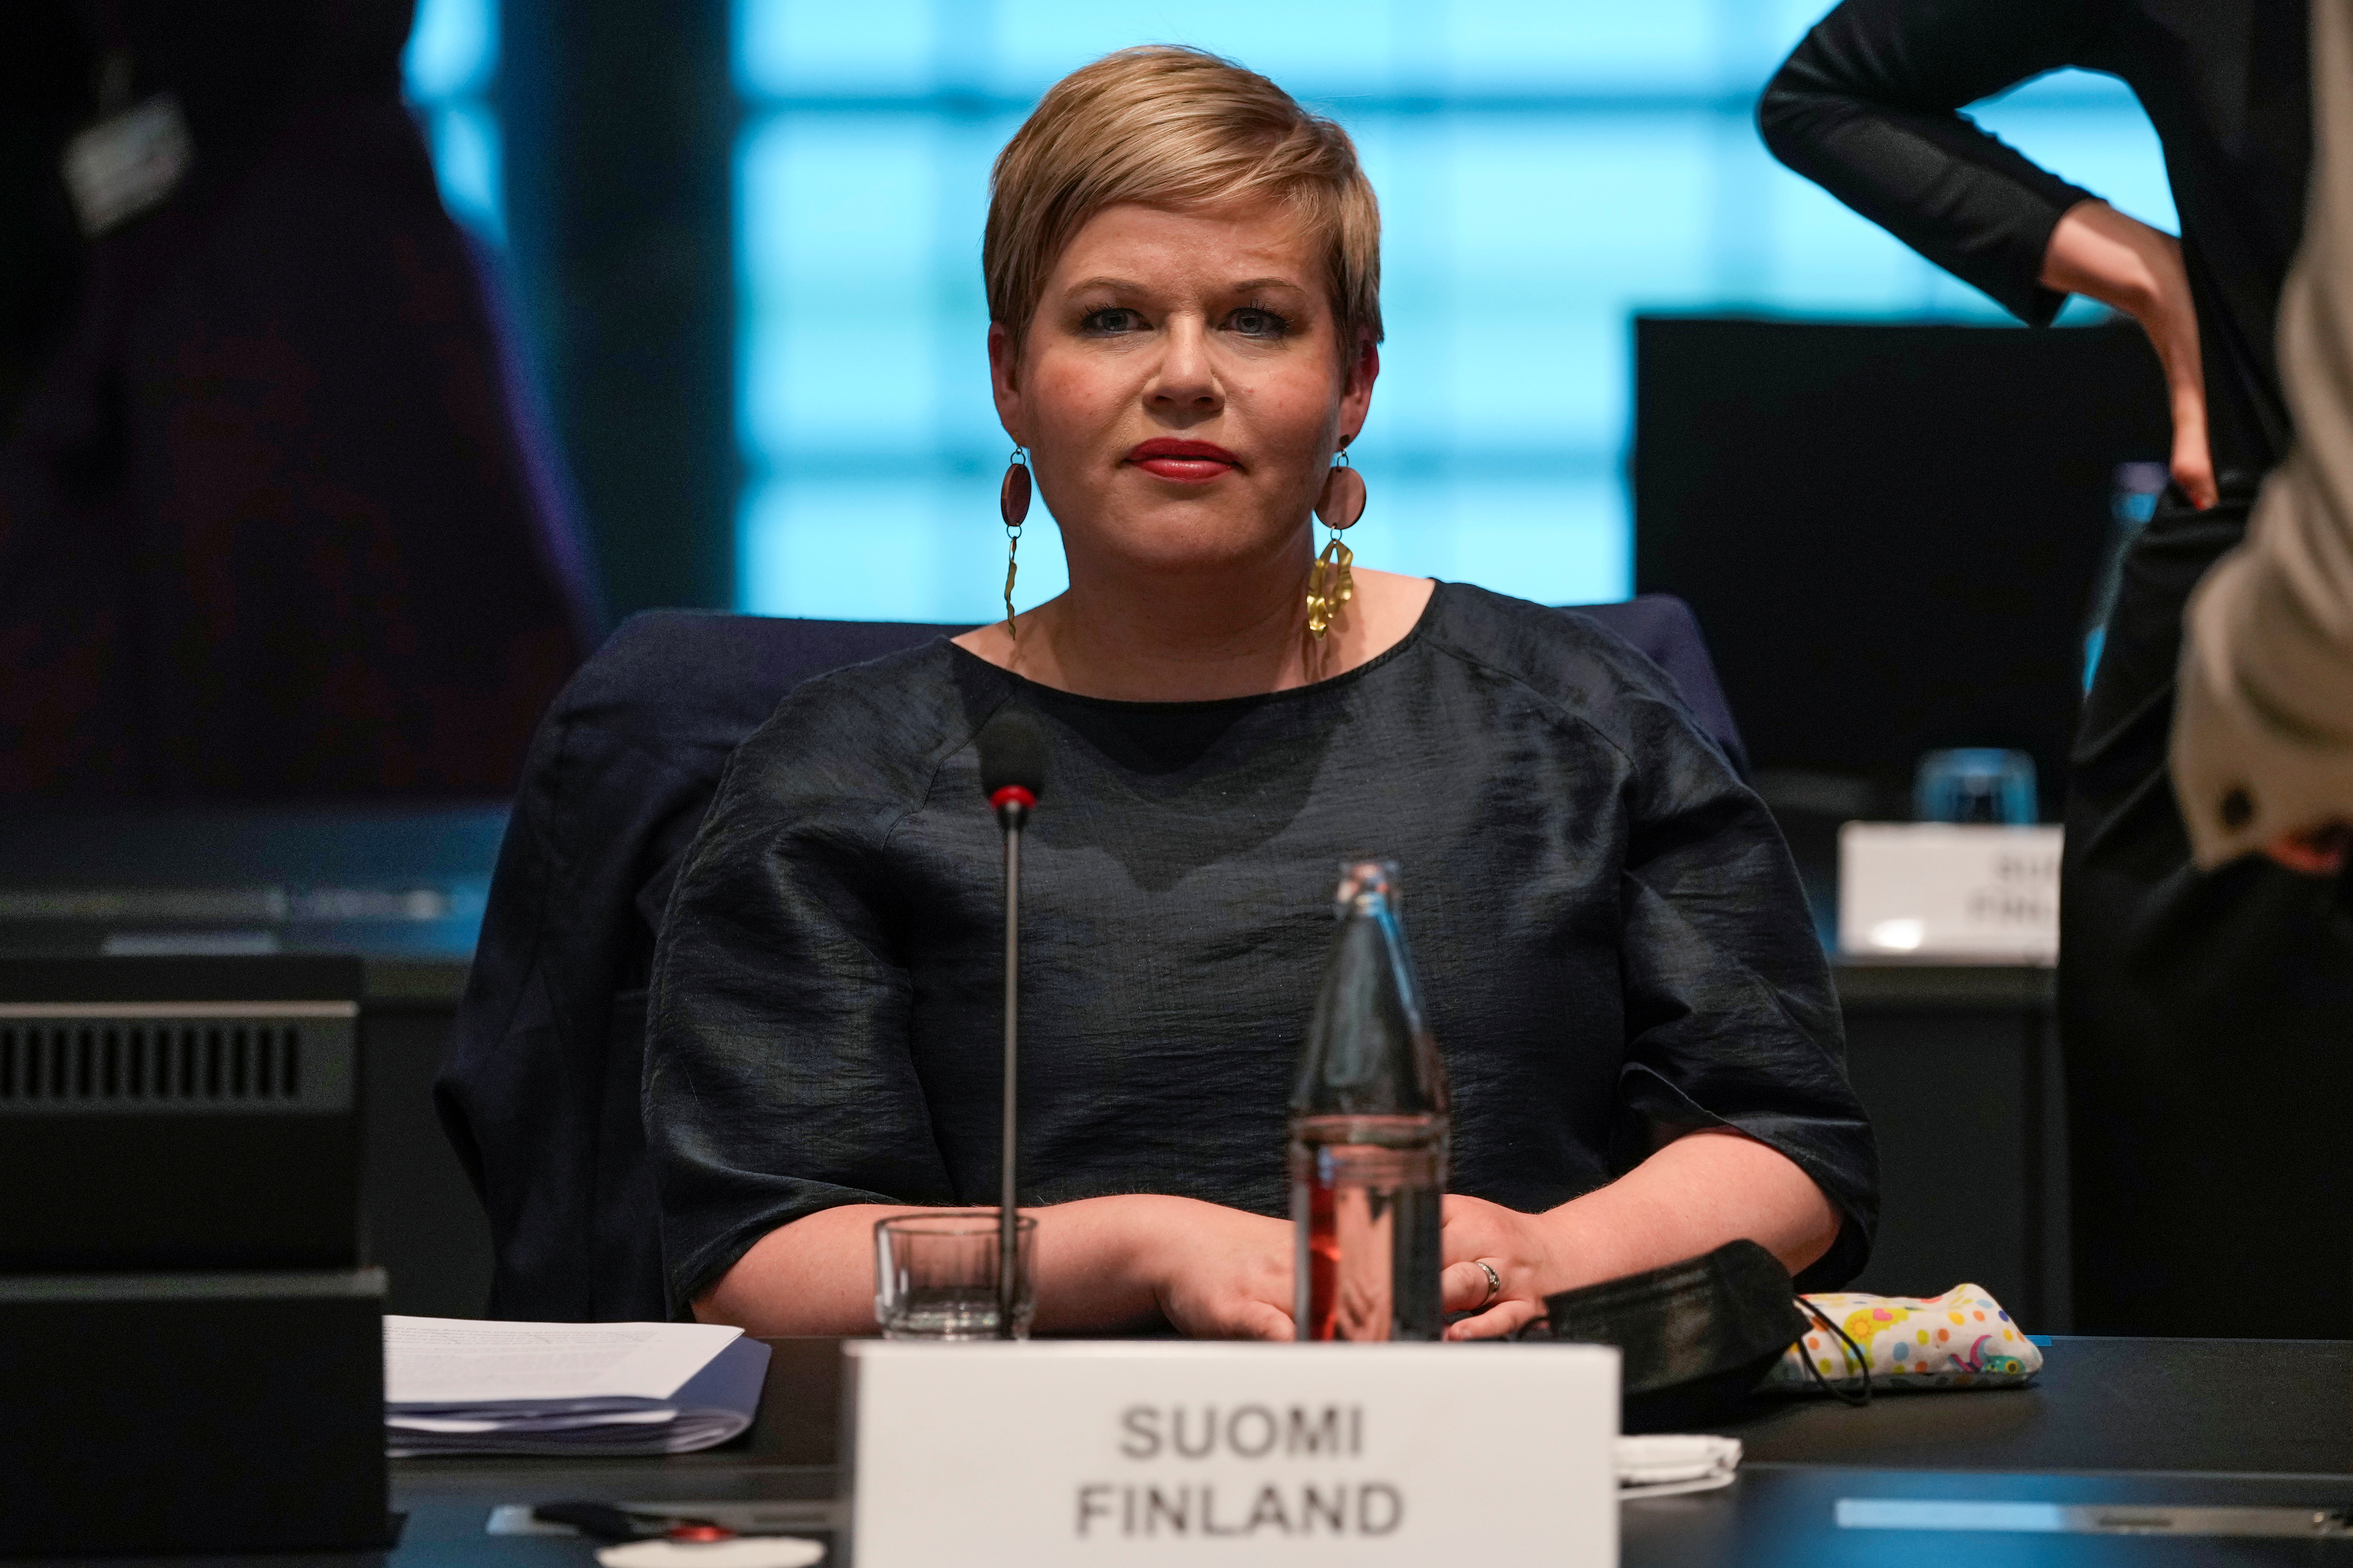 Central Party leader Annika Sariko